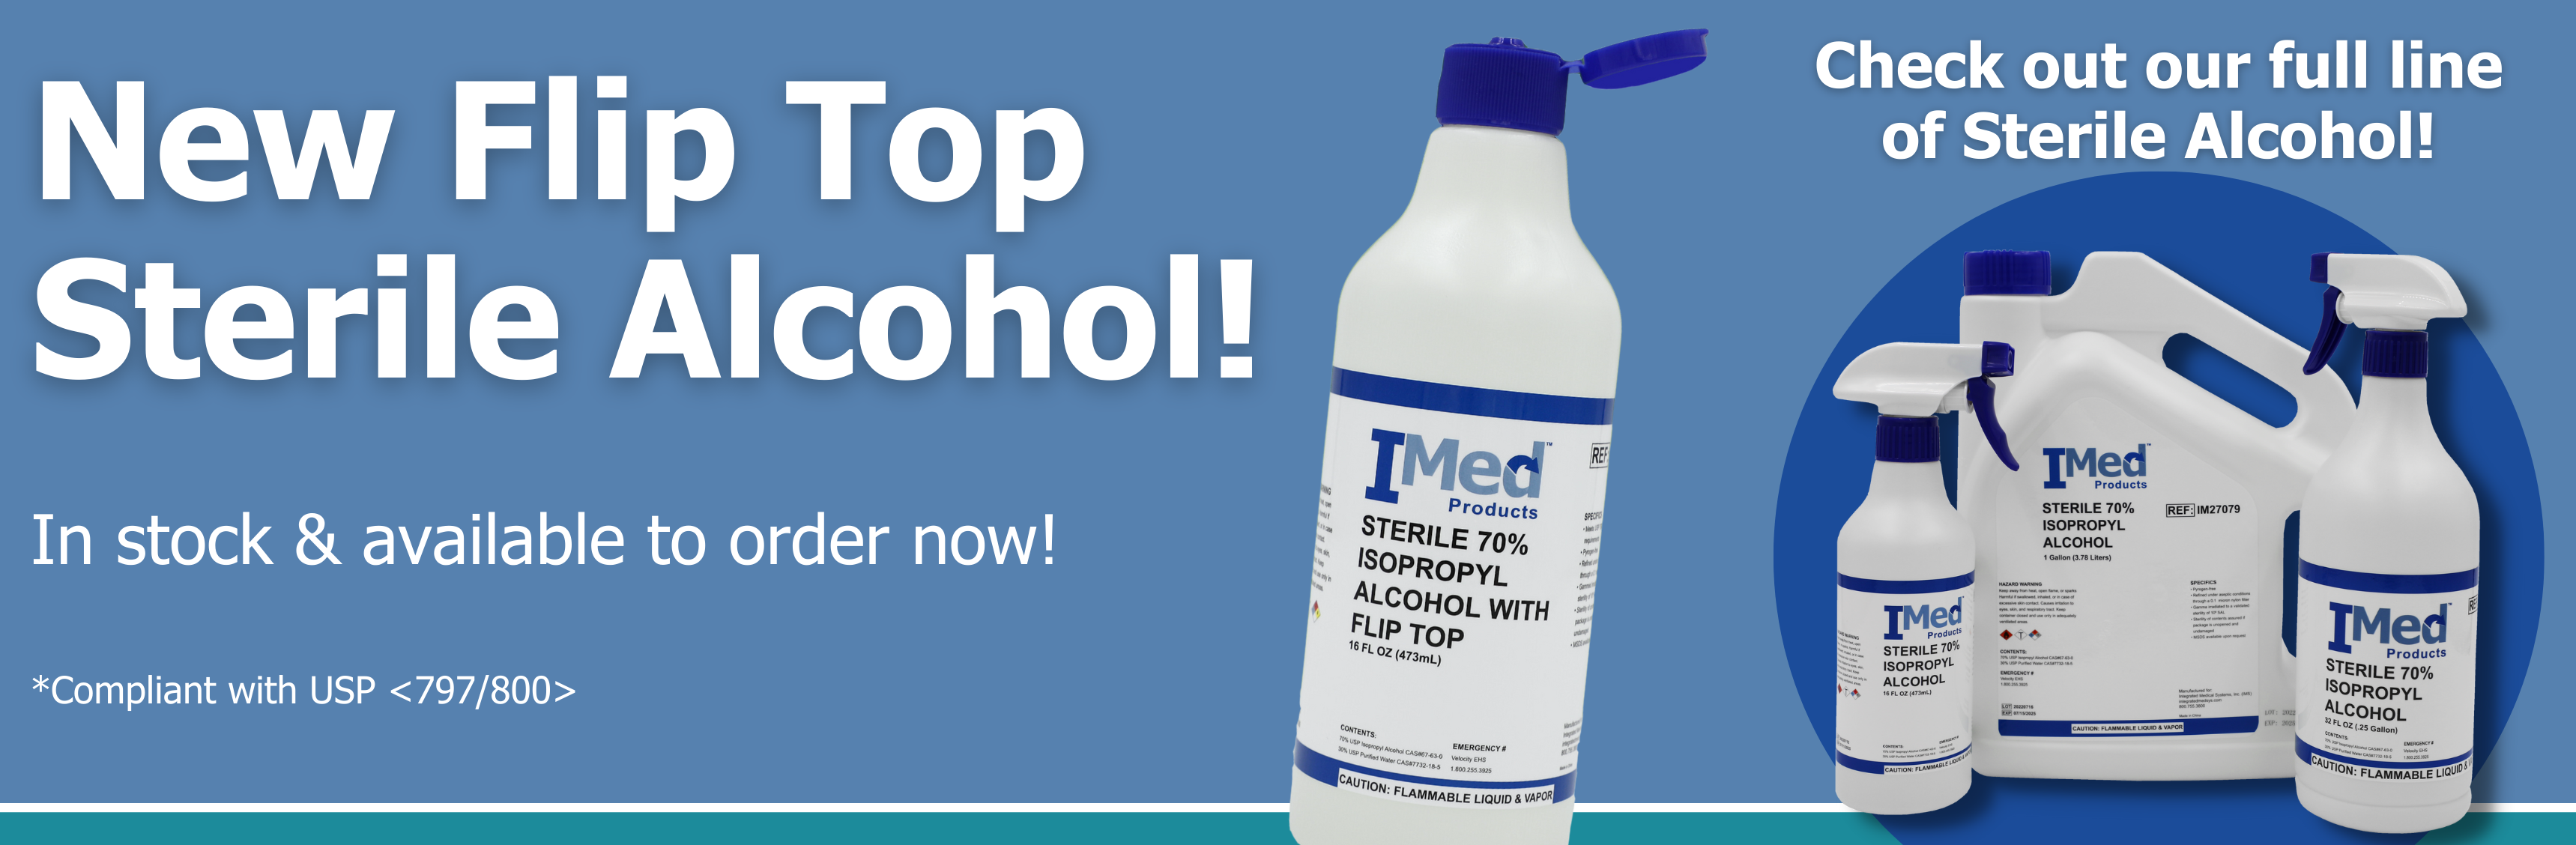 New IMed Flip Top Sterile Alcohol